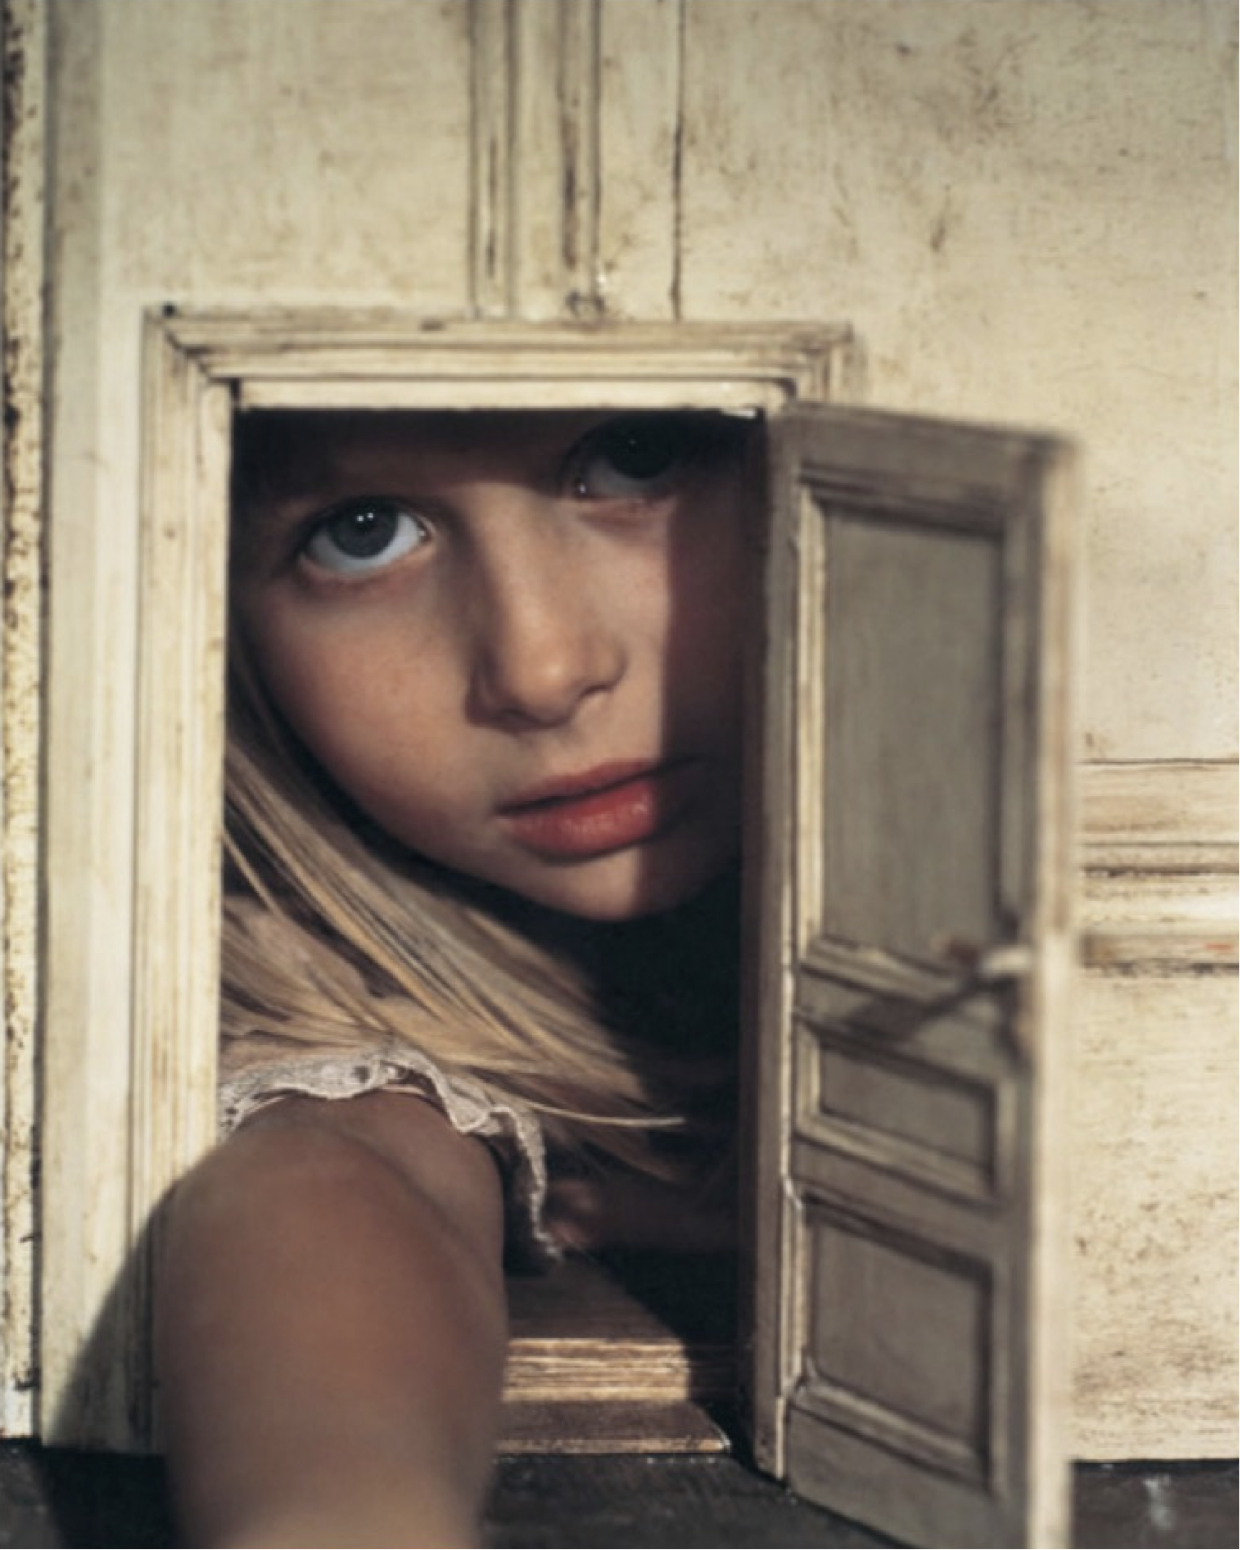 Photogramme du film Alice, de Jan Svankmajer